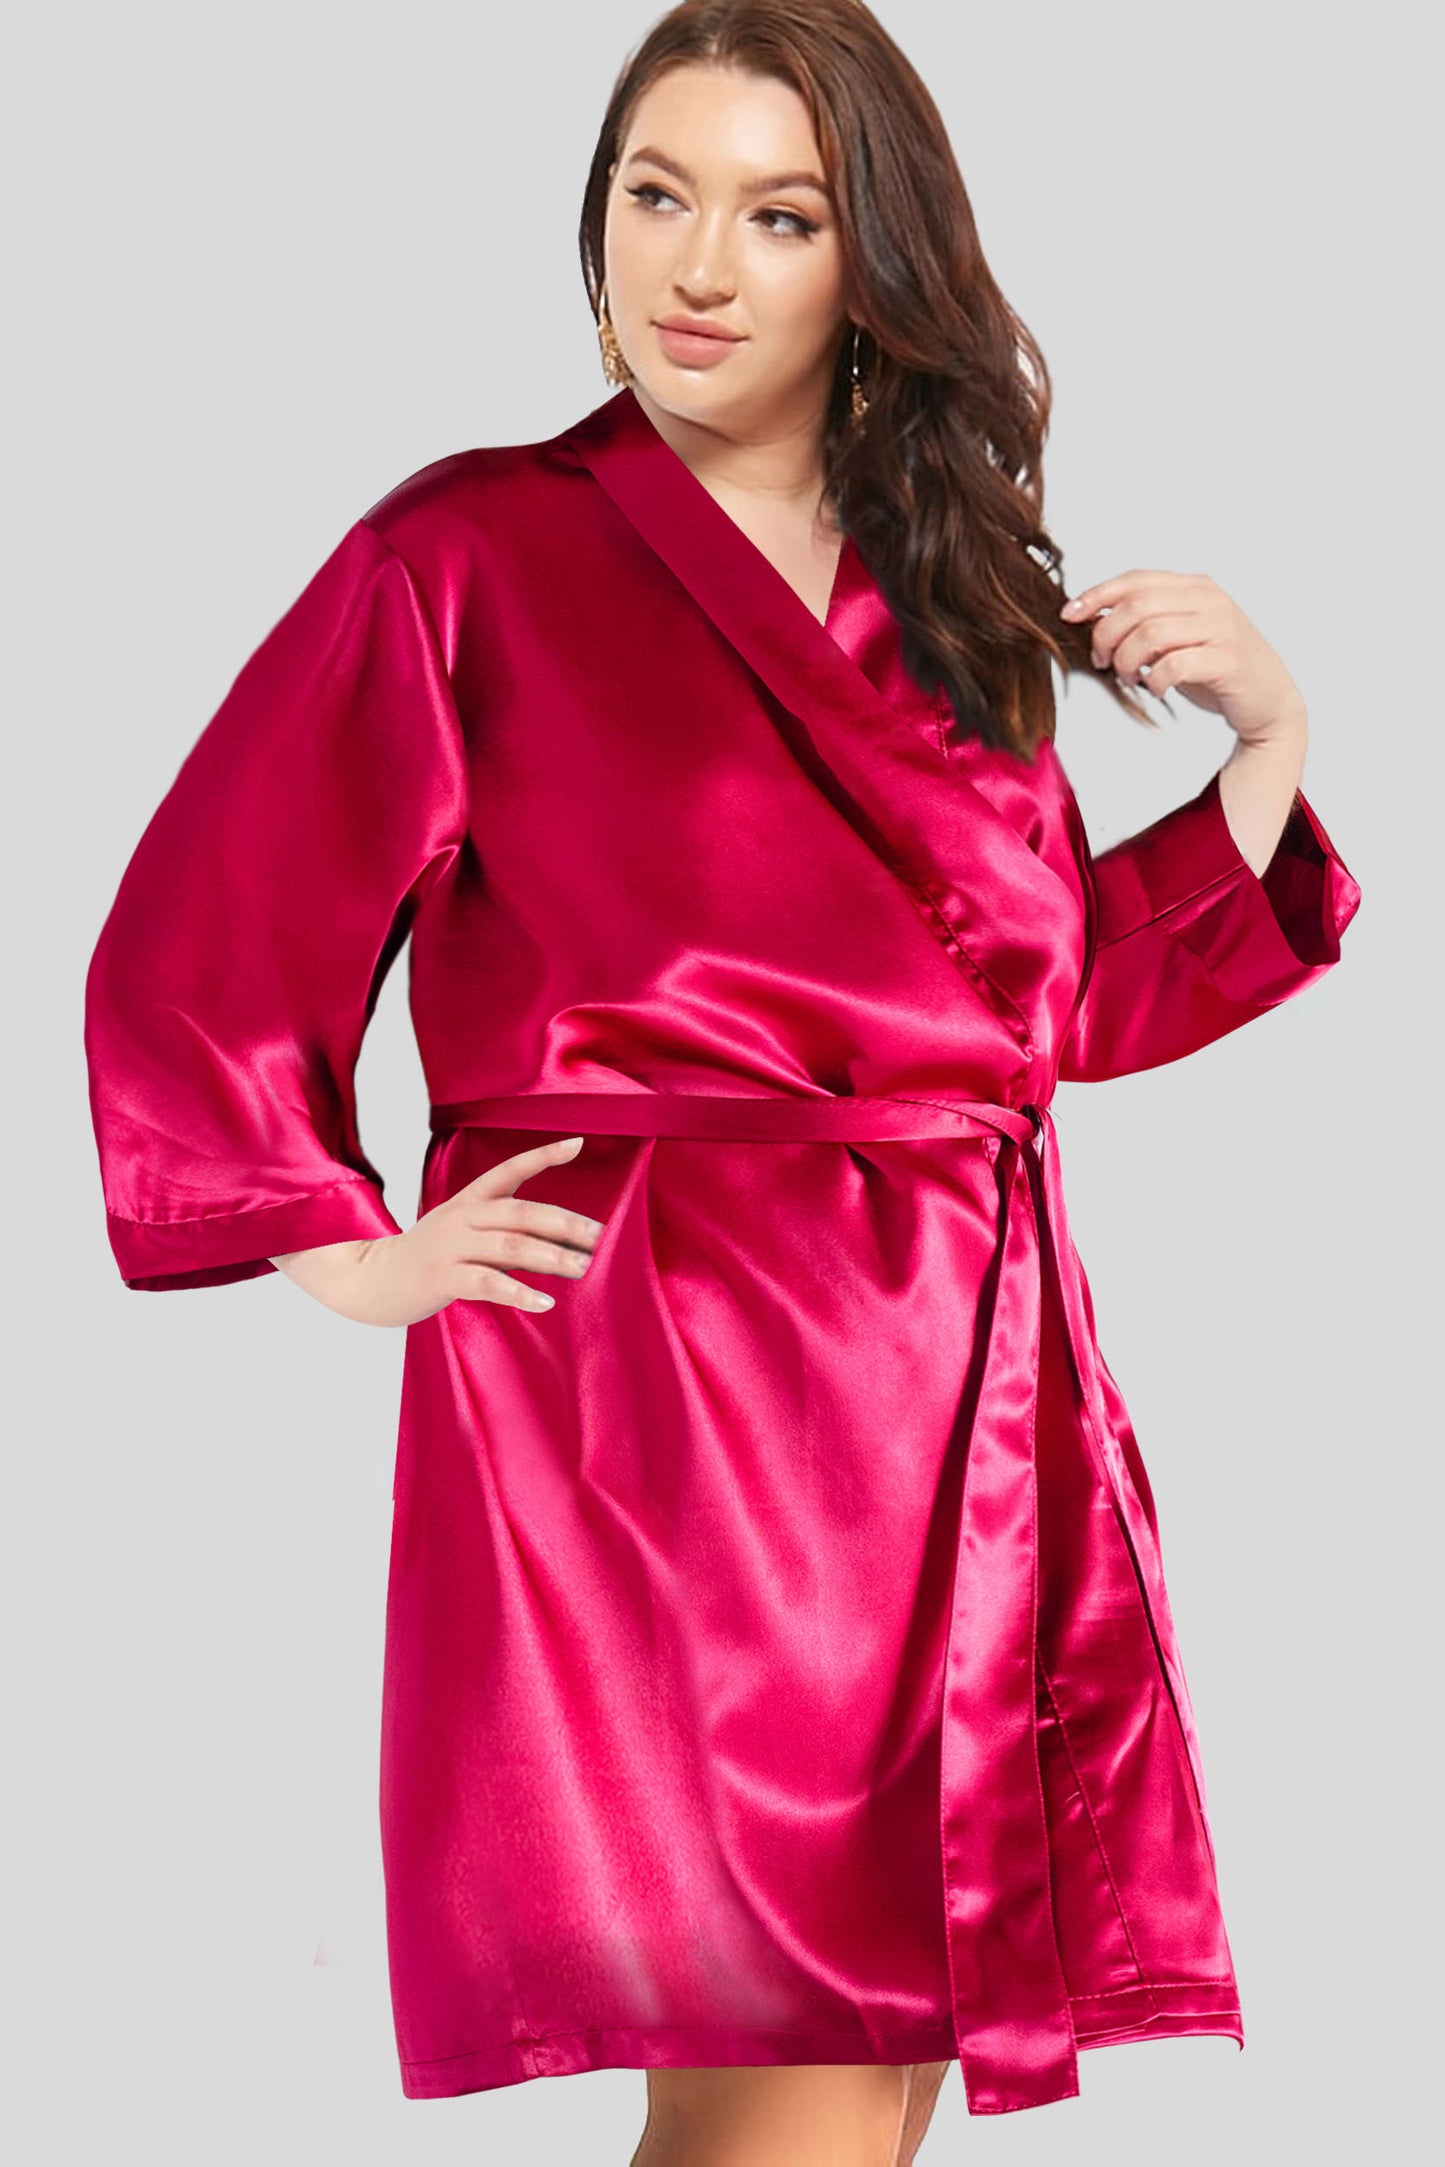 Burgundy Satin Kimono Bridal Robe XL - Bridesmaid Robe - Affordable Robe - Wedding Gift - Bridal Gift - Bridesmaid Gift - Satin Robe - Kimono Robe – PrettyRobes